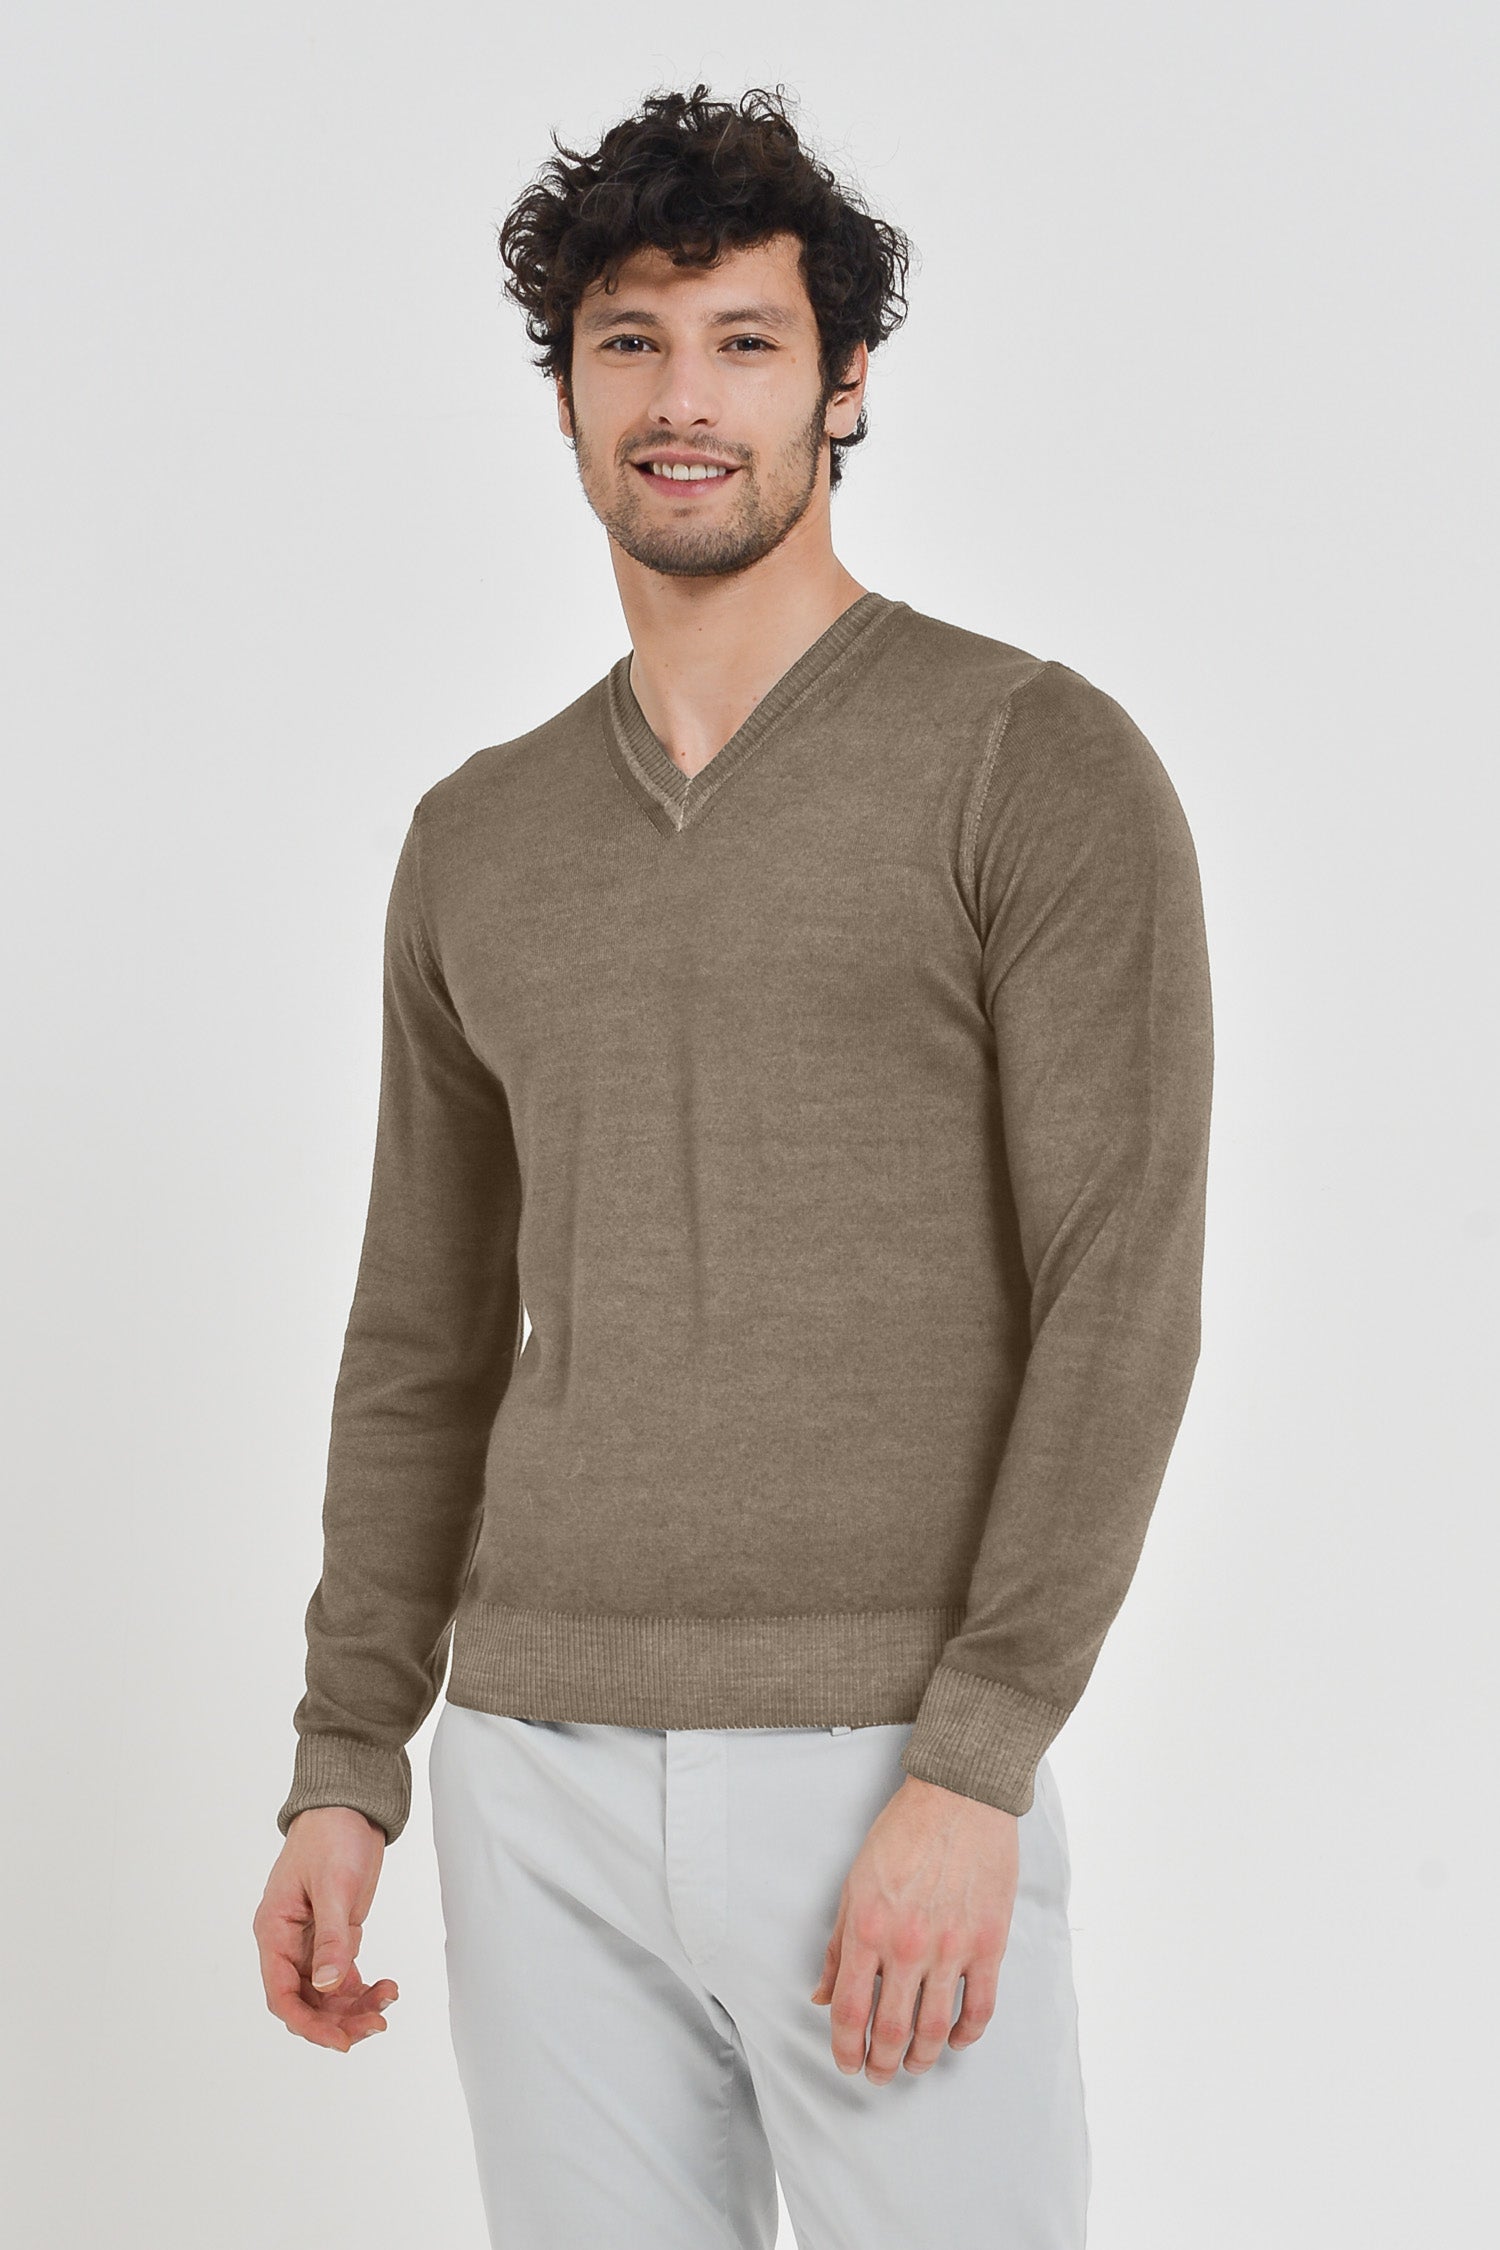 Wick - Extrafine Merino Wool V-Neck Sweater - Castoro